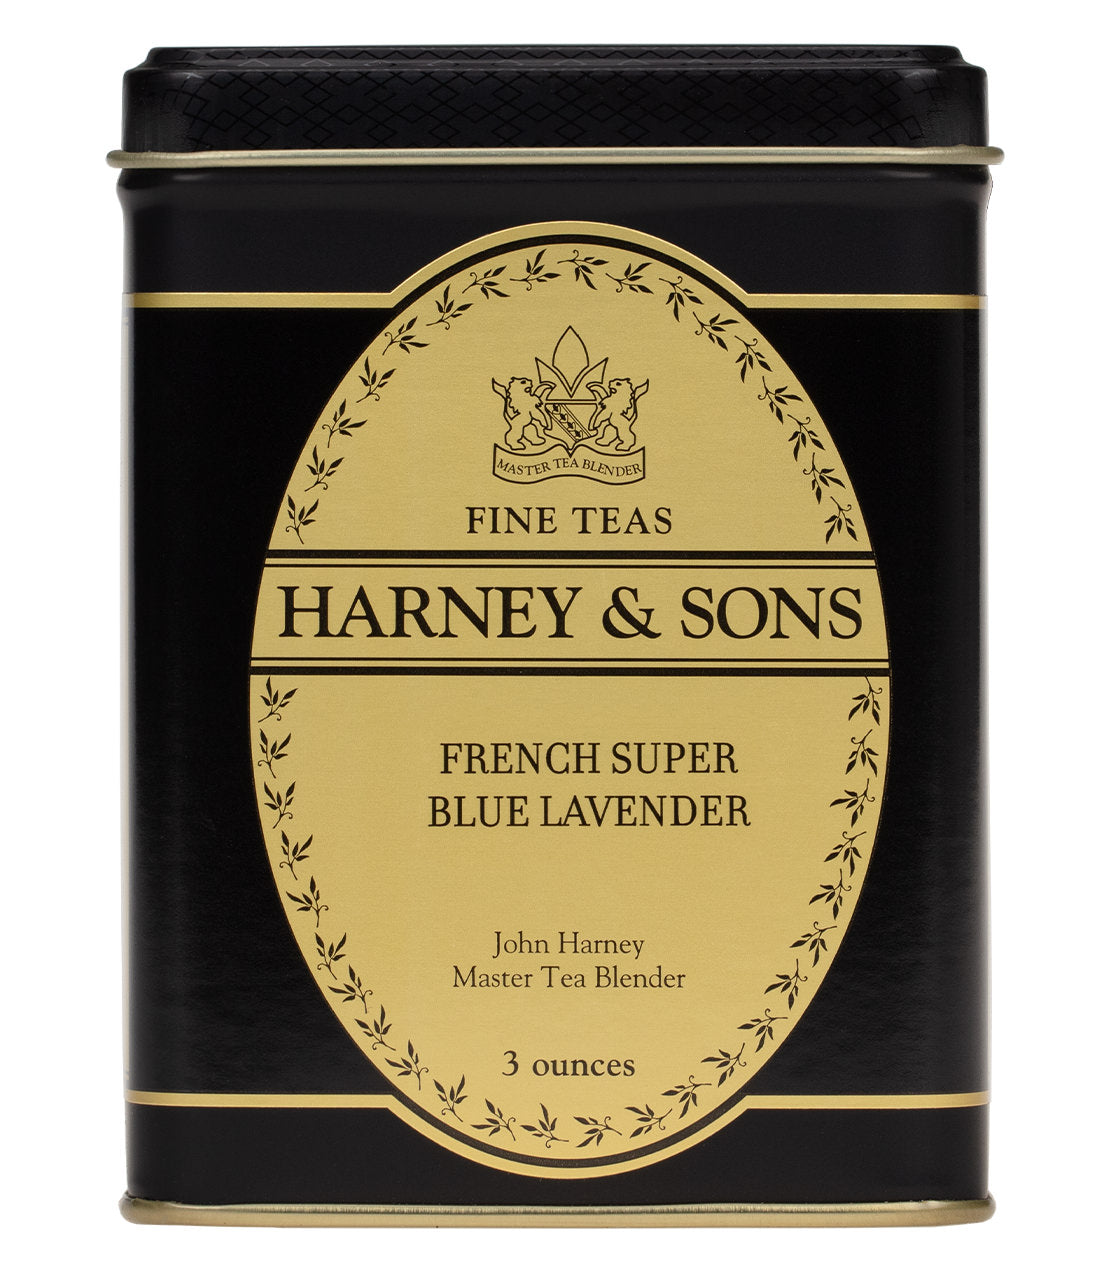 French Super Blue Lavender - Loose 3 oz. Tin - Harney & Sons Fine Teas